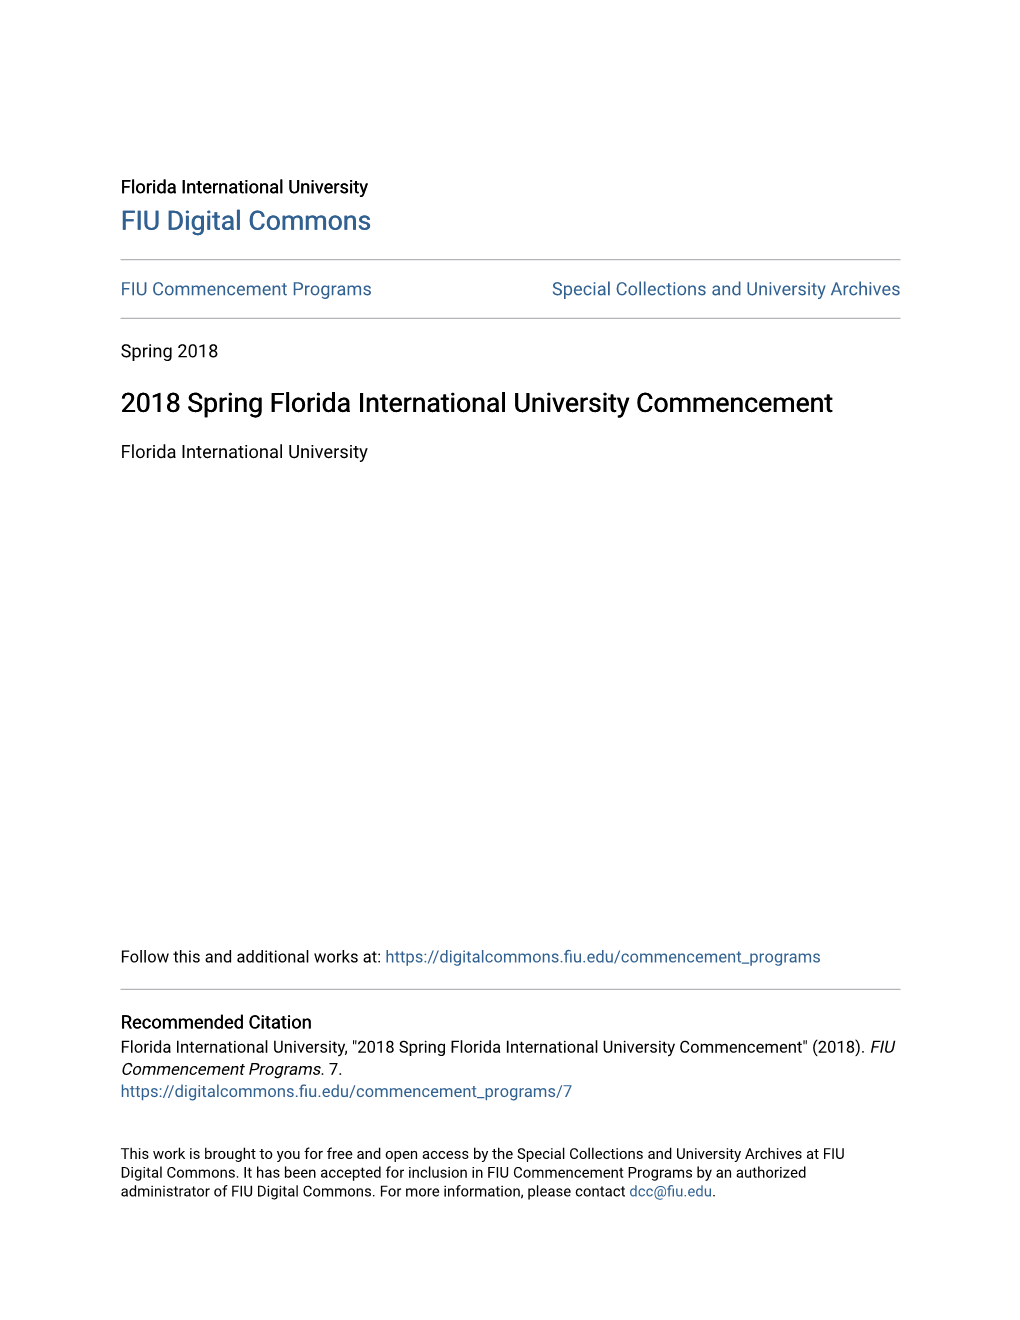 2018 Spring Florida International University Commencement